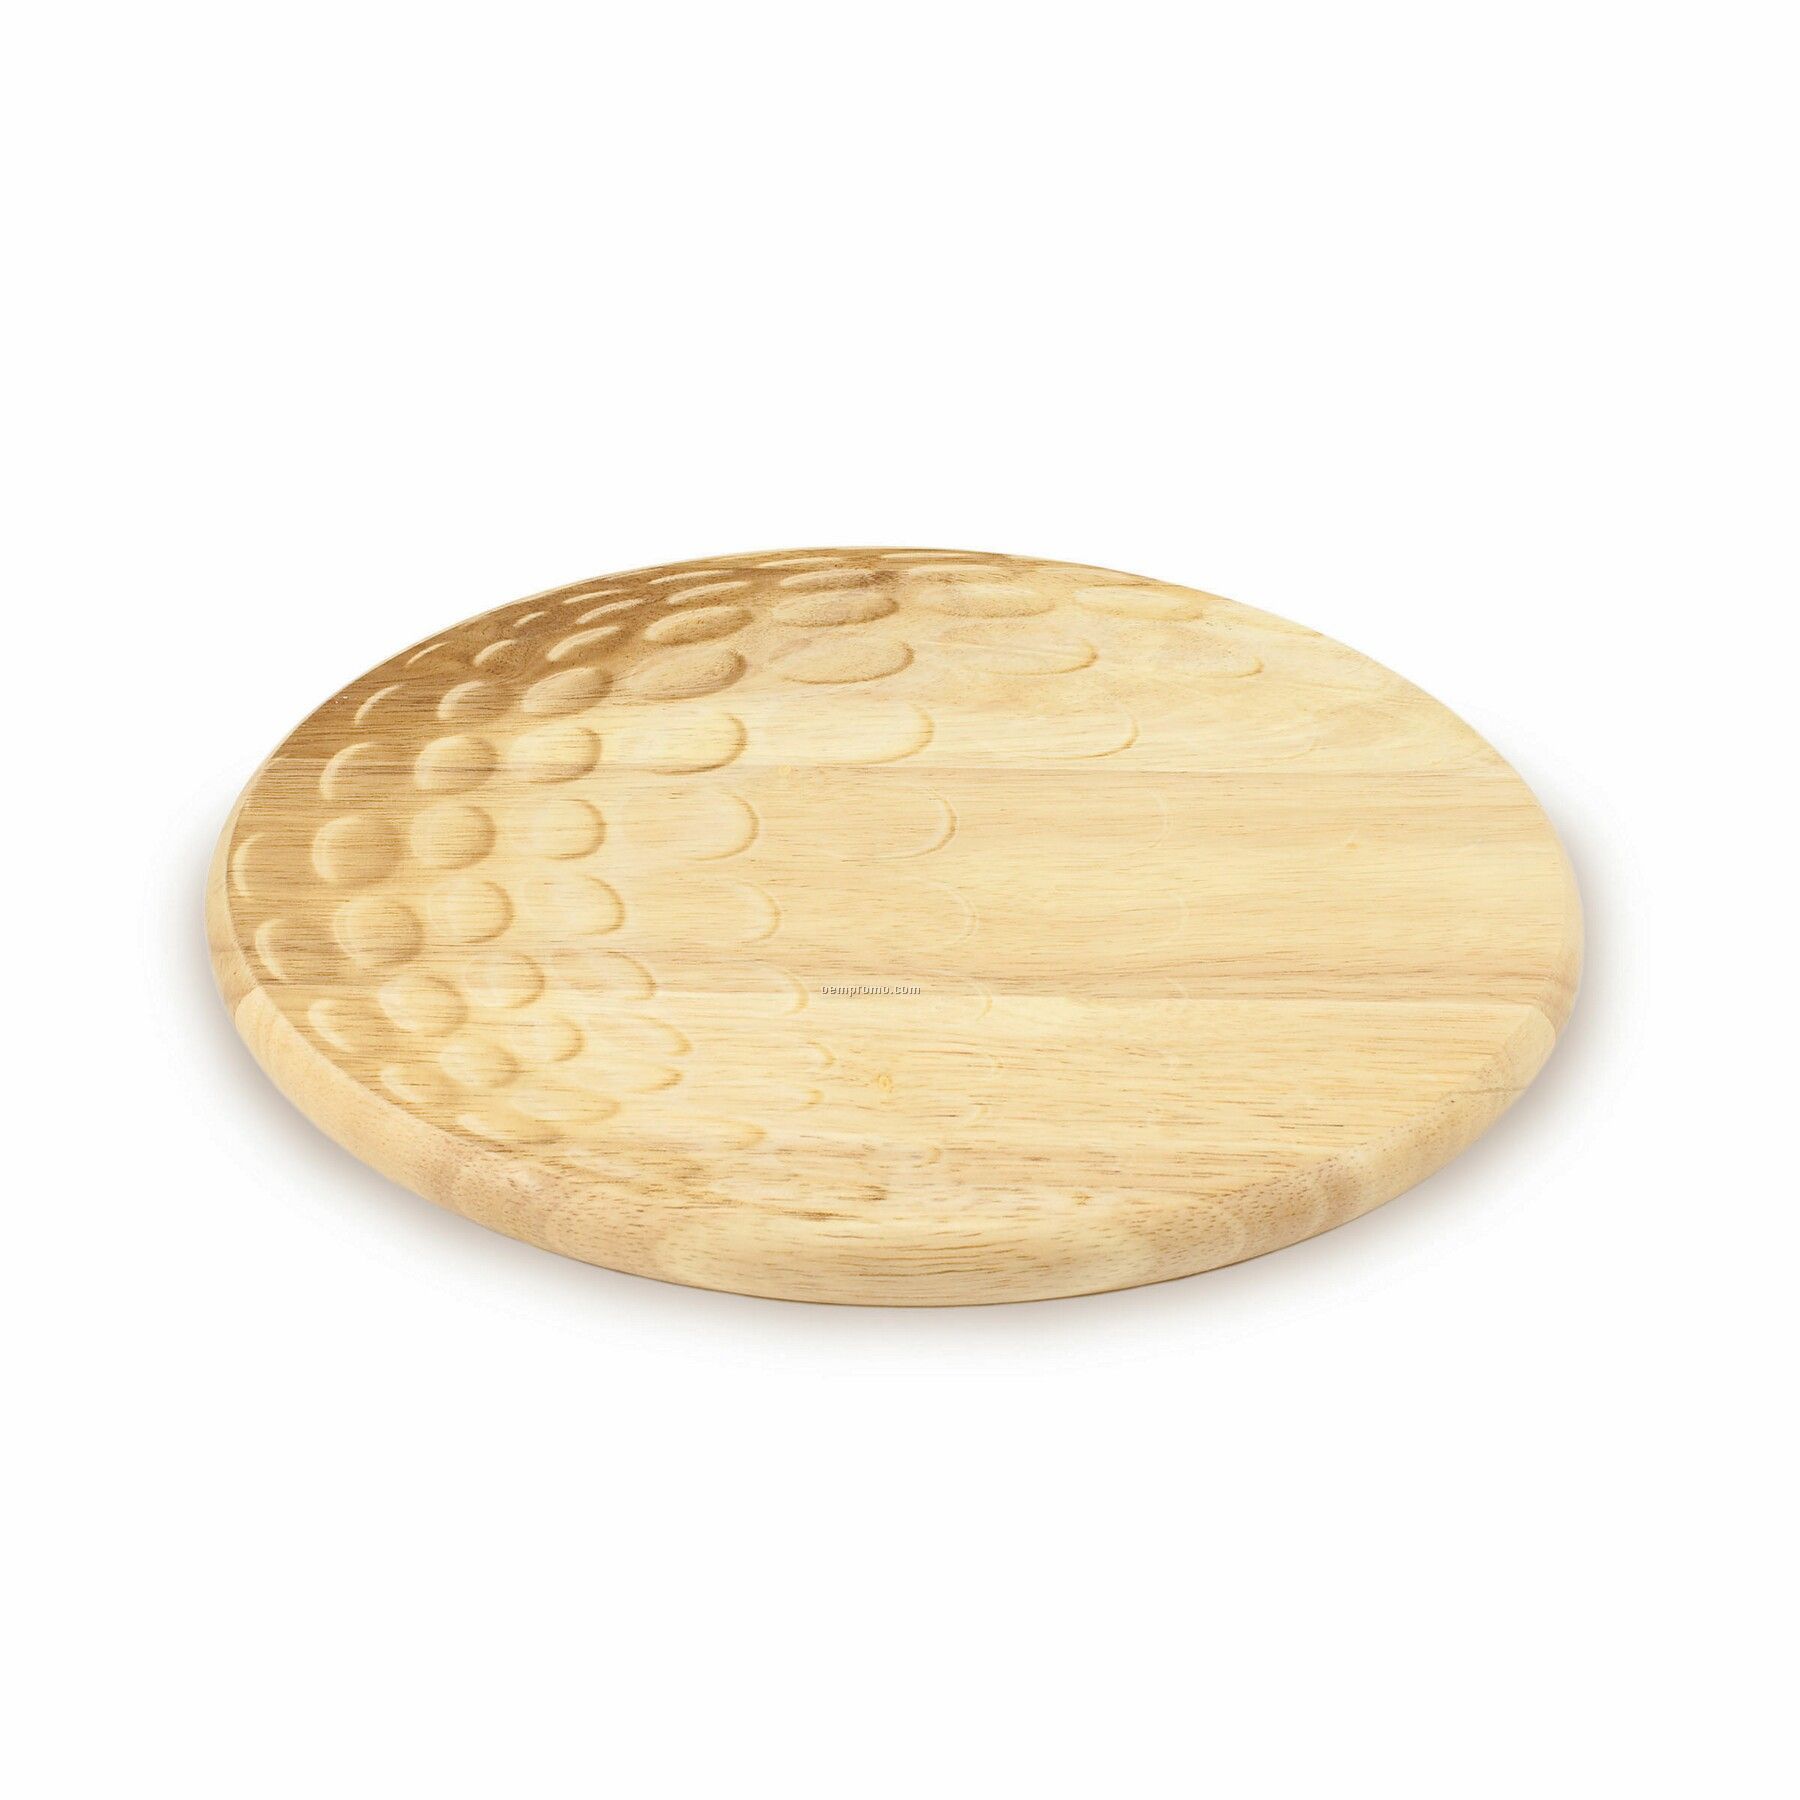 Golf Ball Shaped Wood Cutting Board / Serving Tray